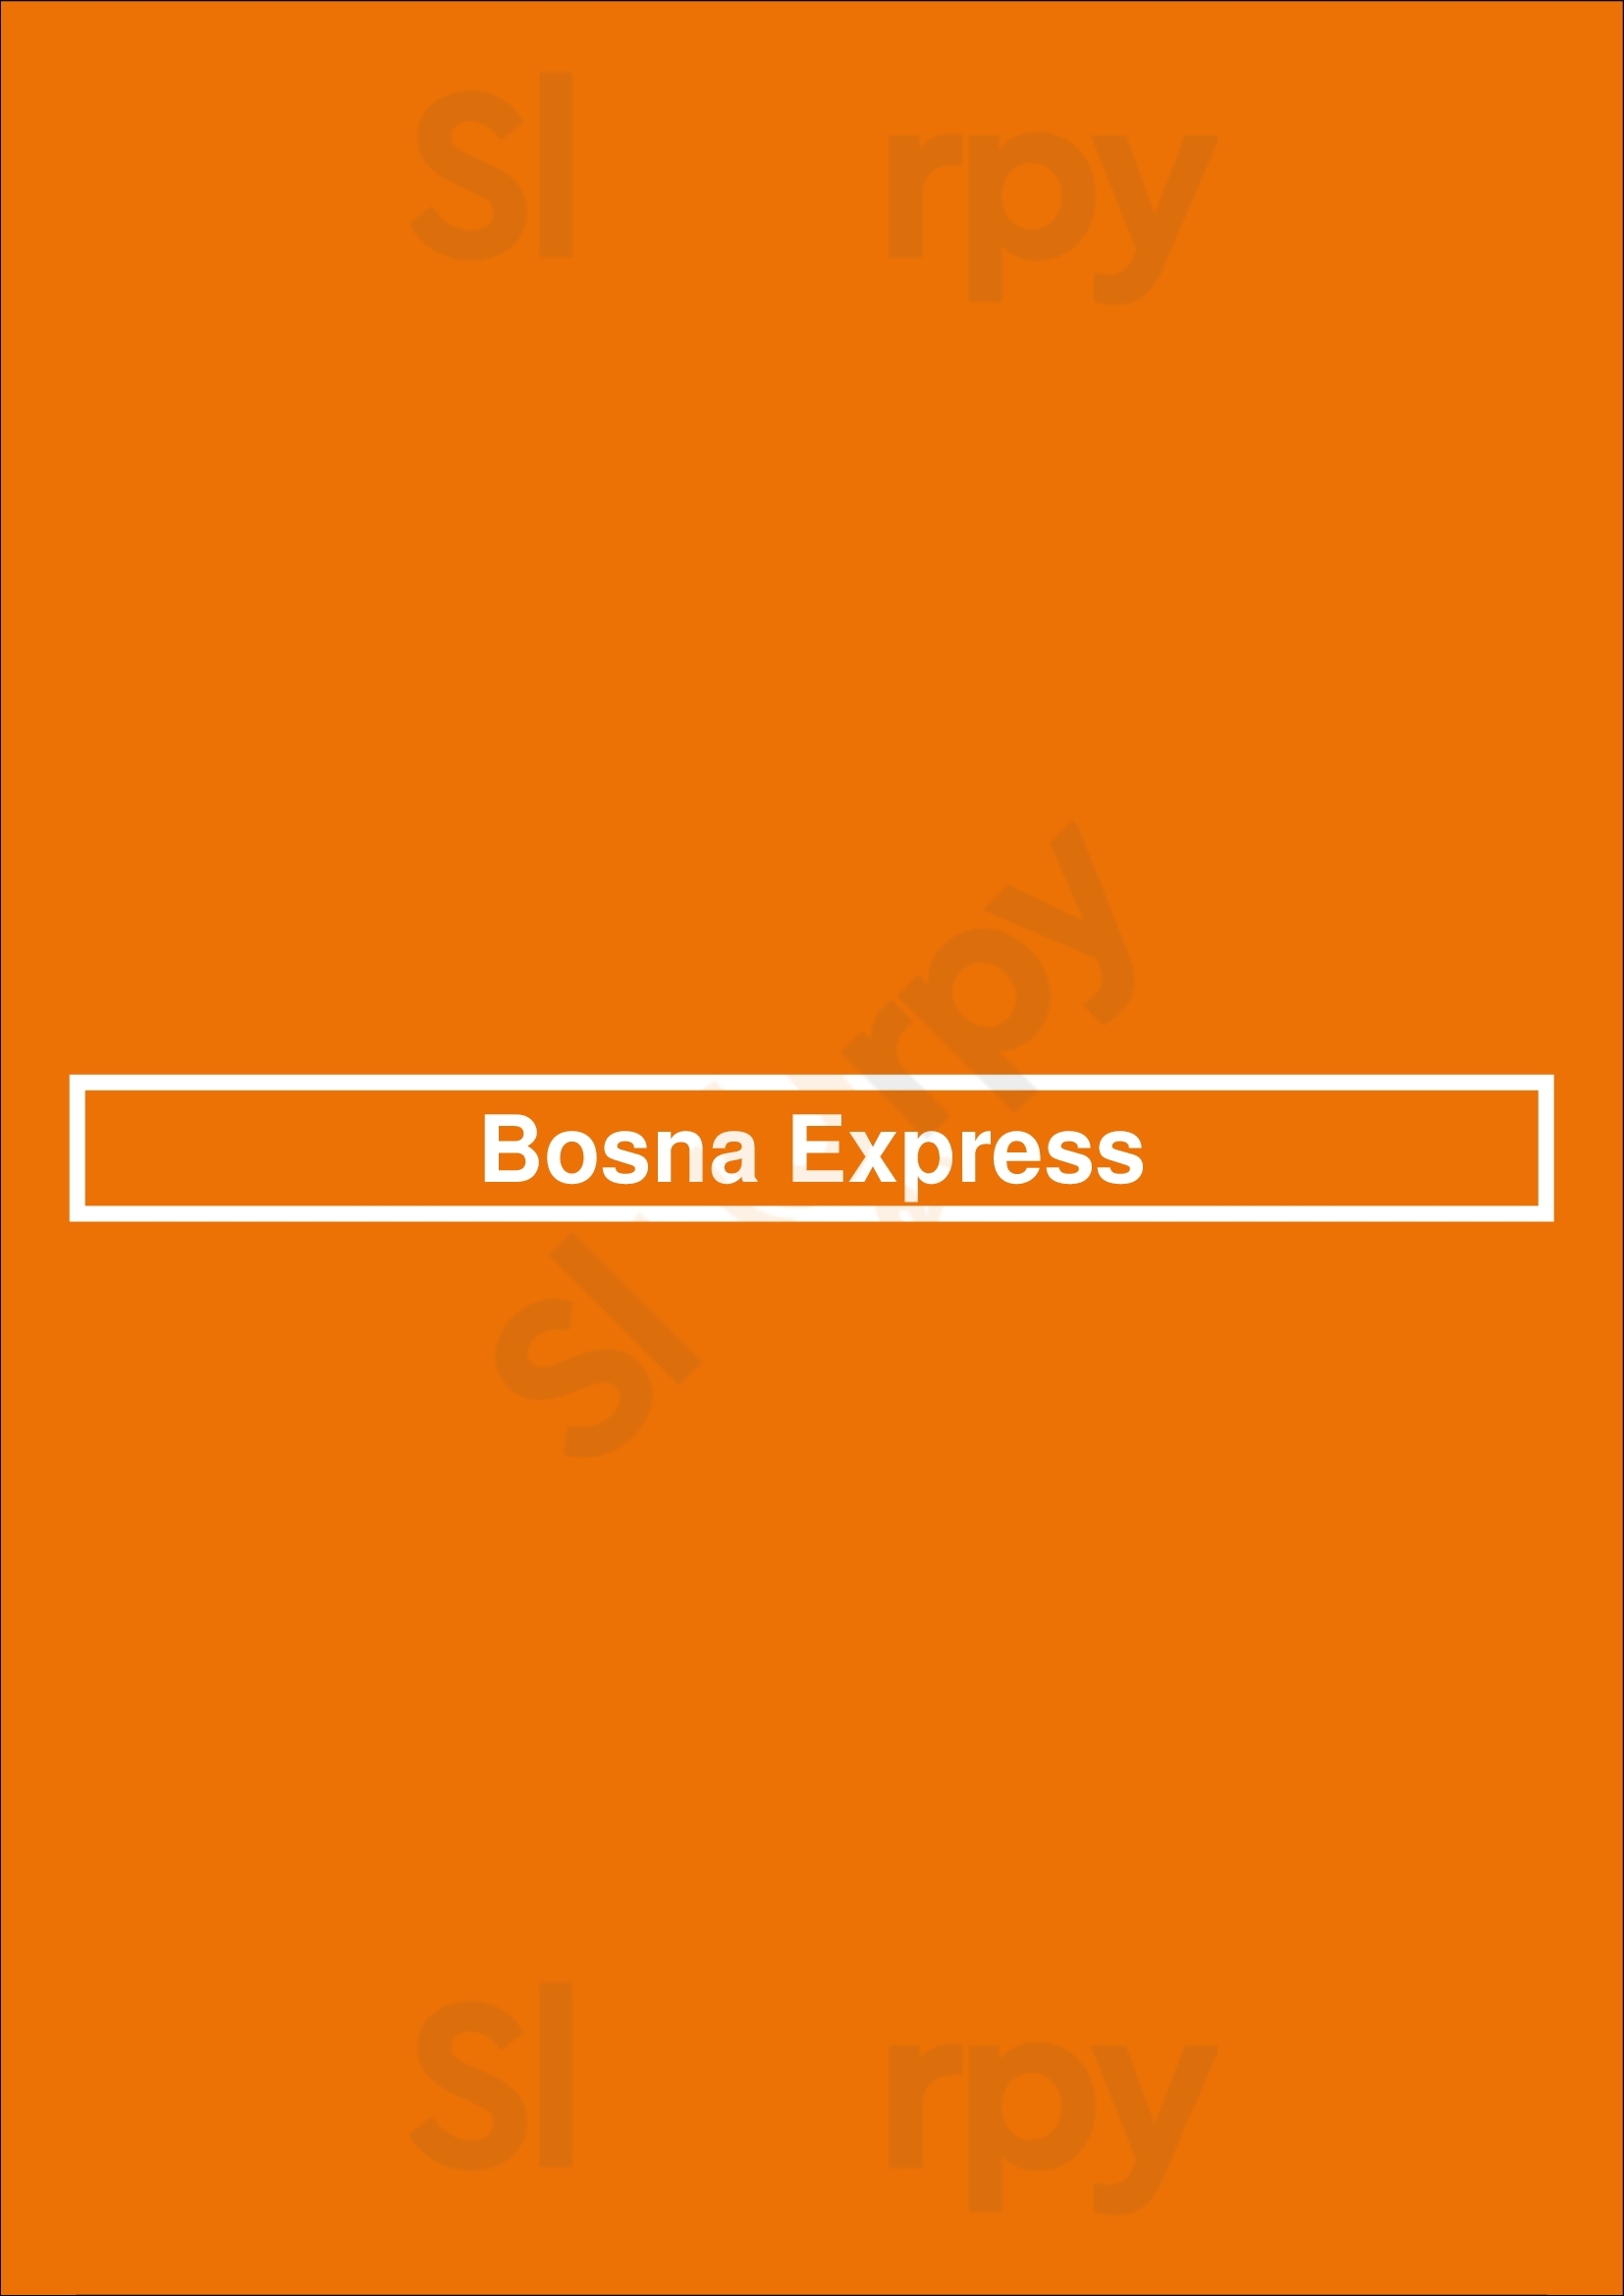 Bosna Express Grand Rapids Menu - 1